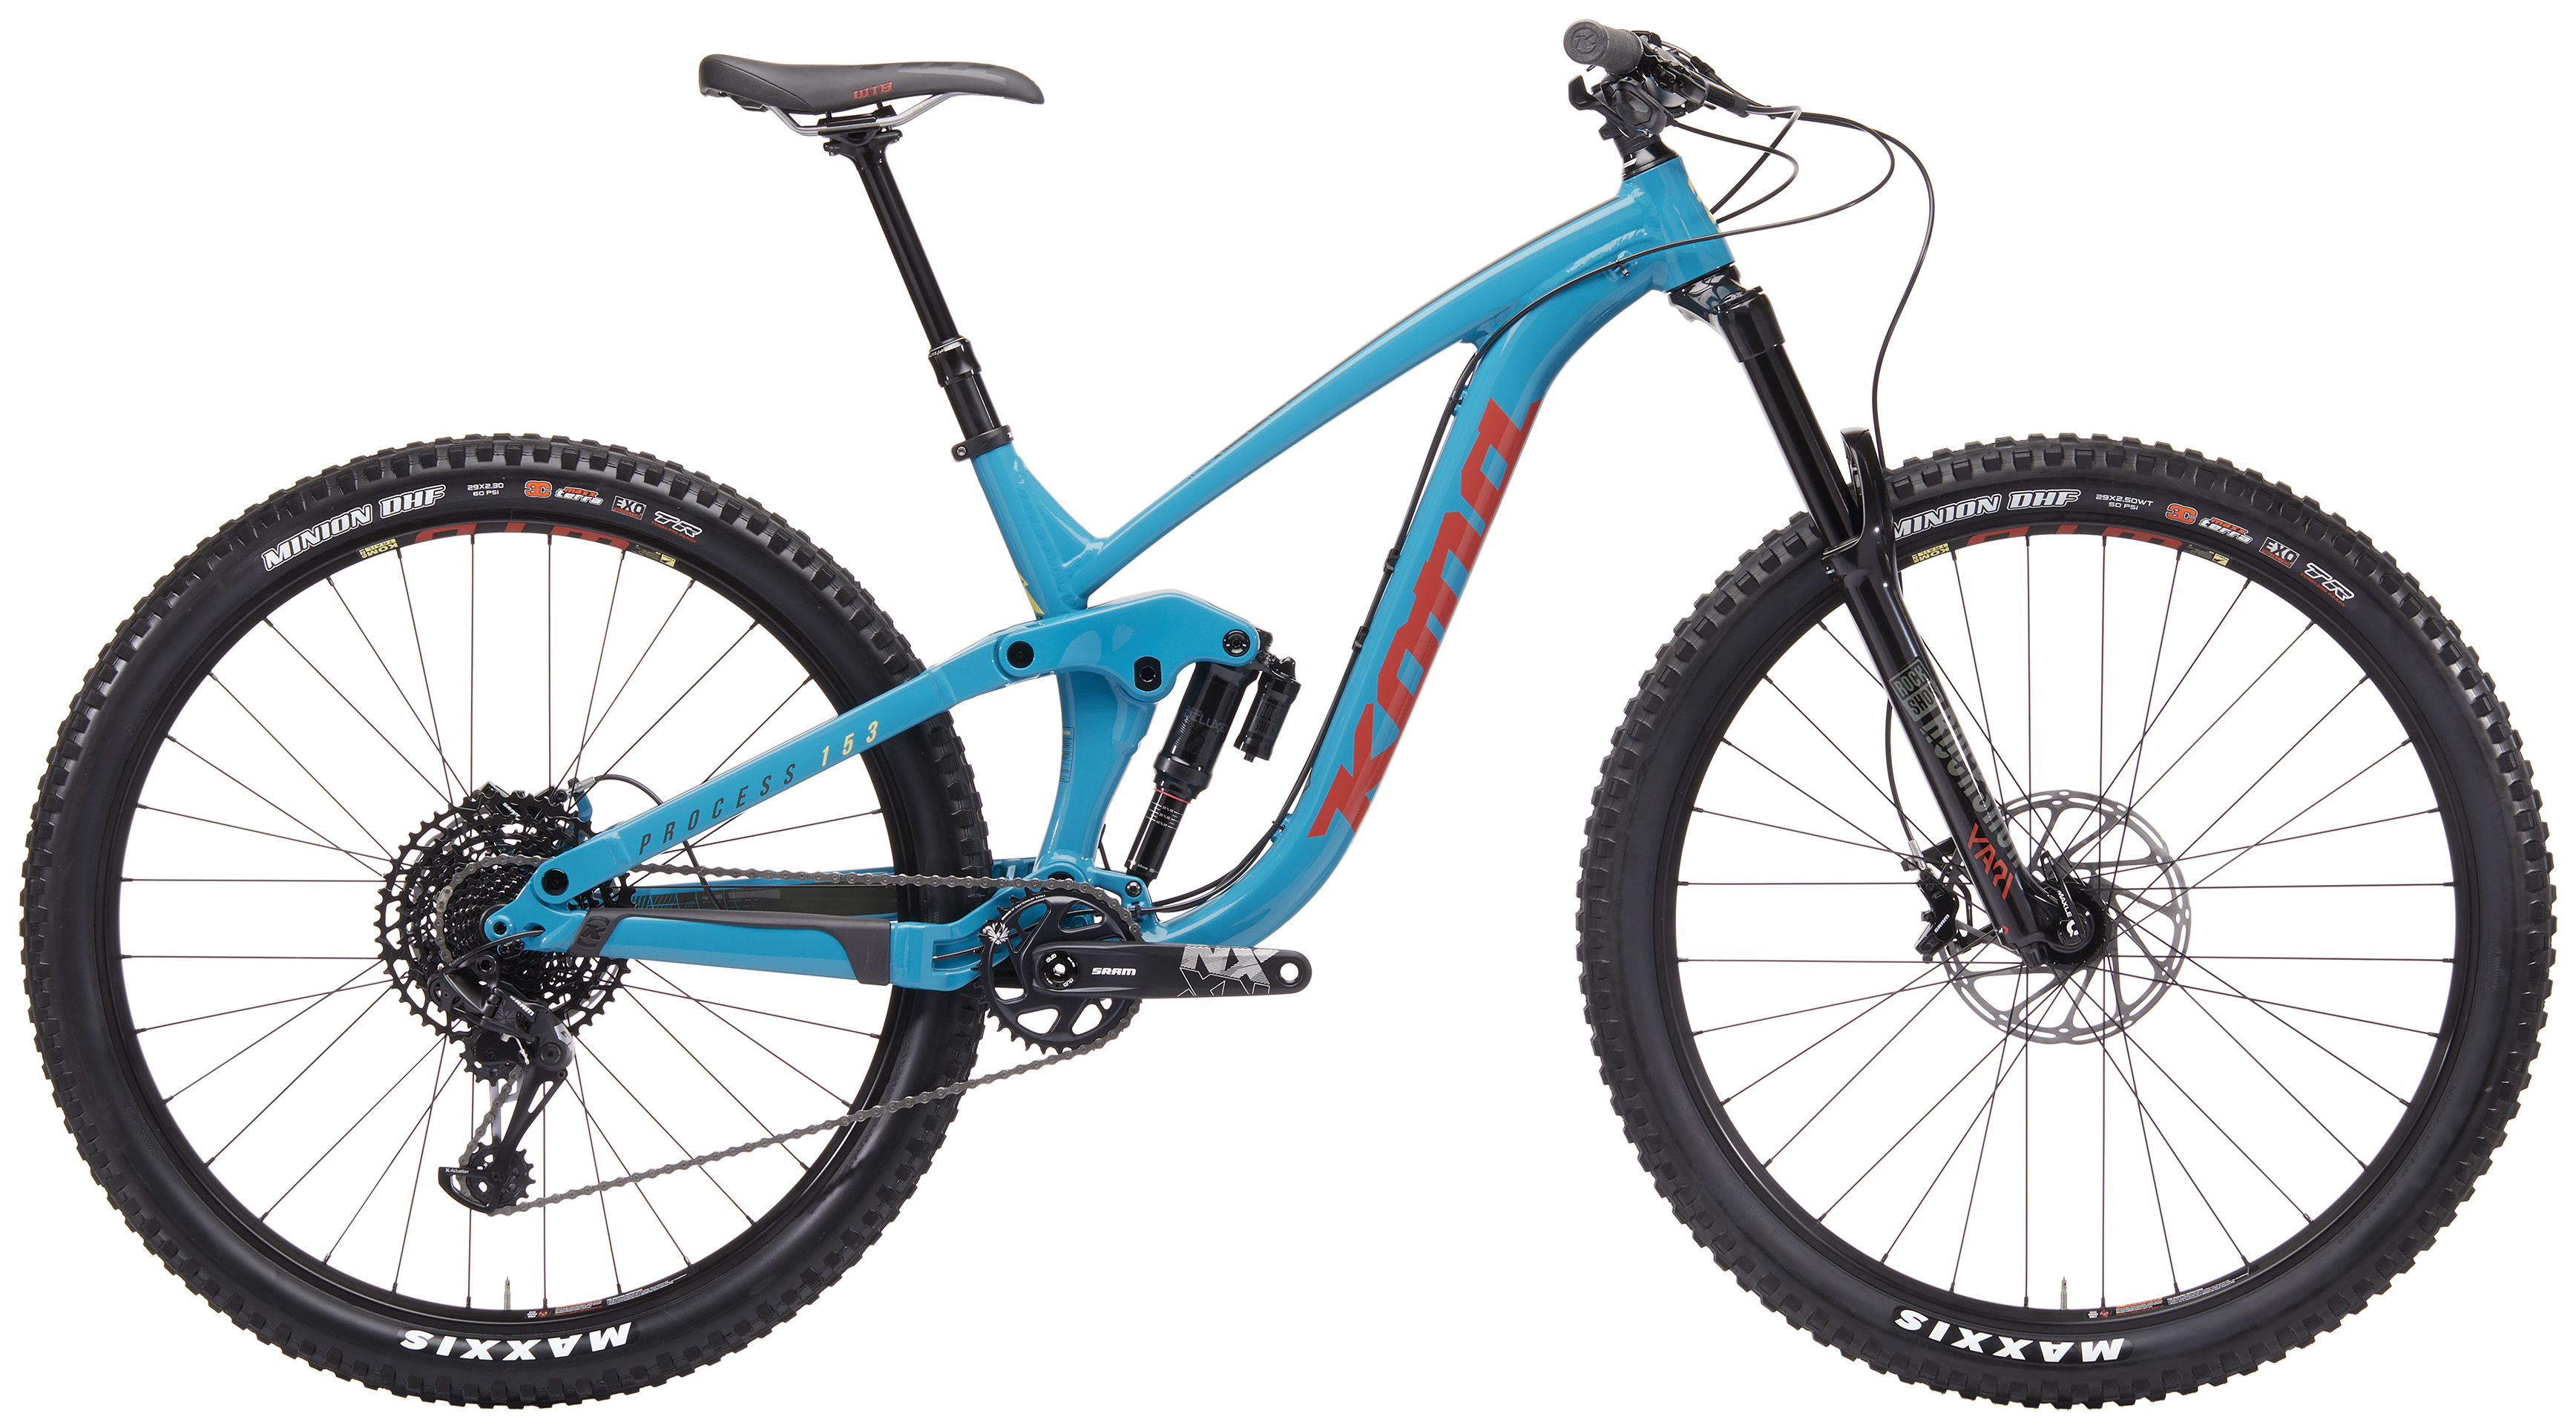 carrera titan 650b limited edition mountain bike 2014